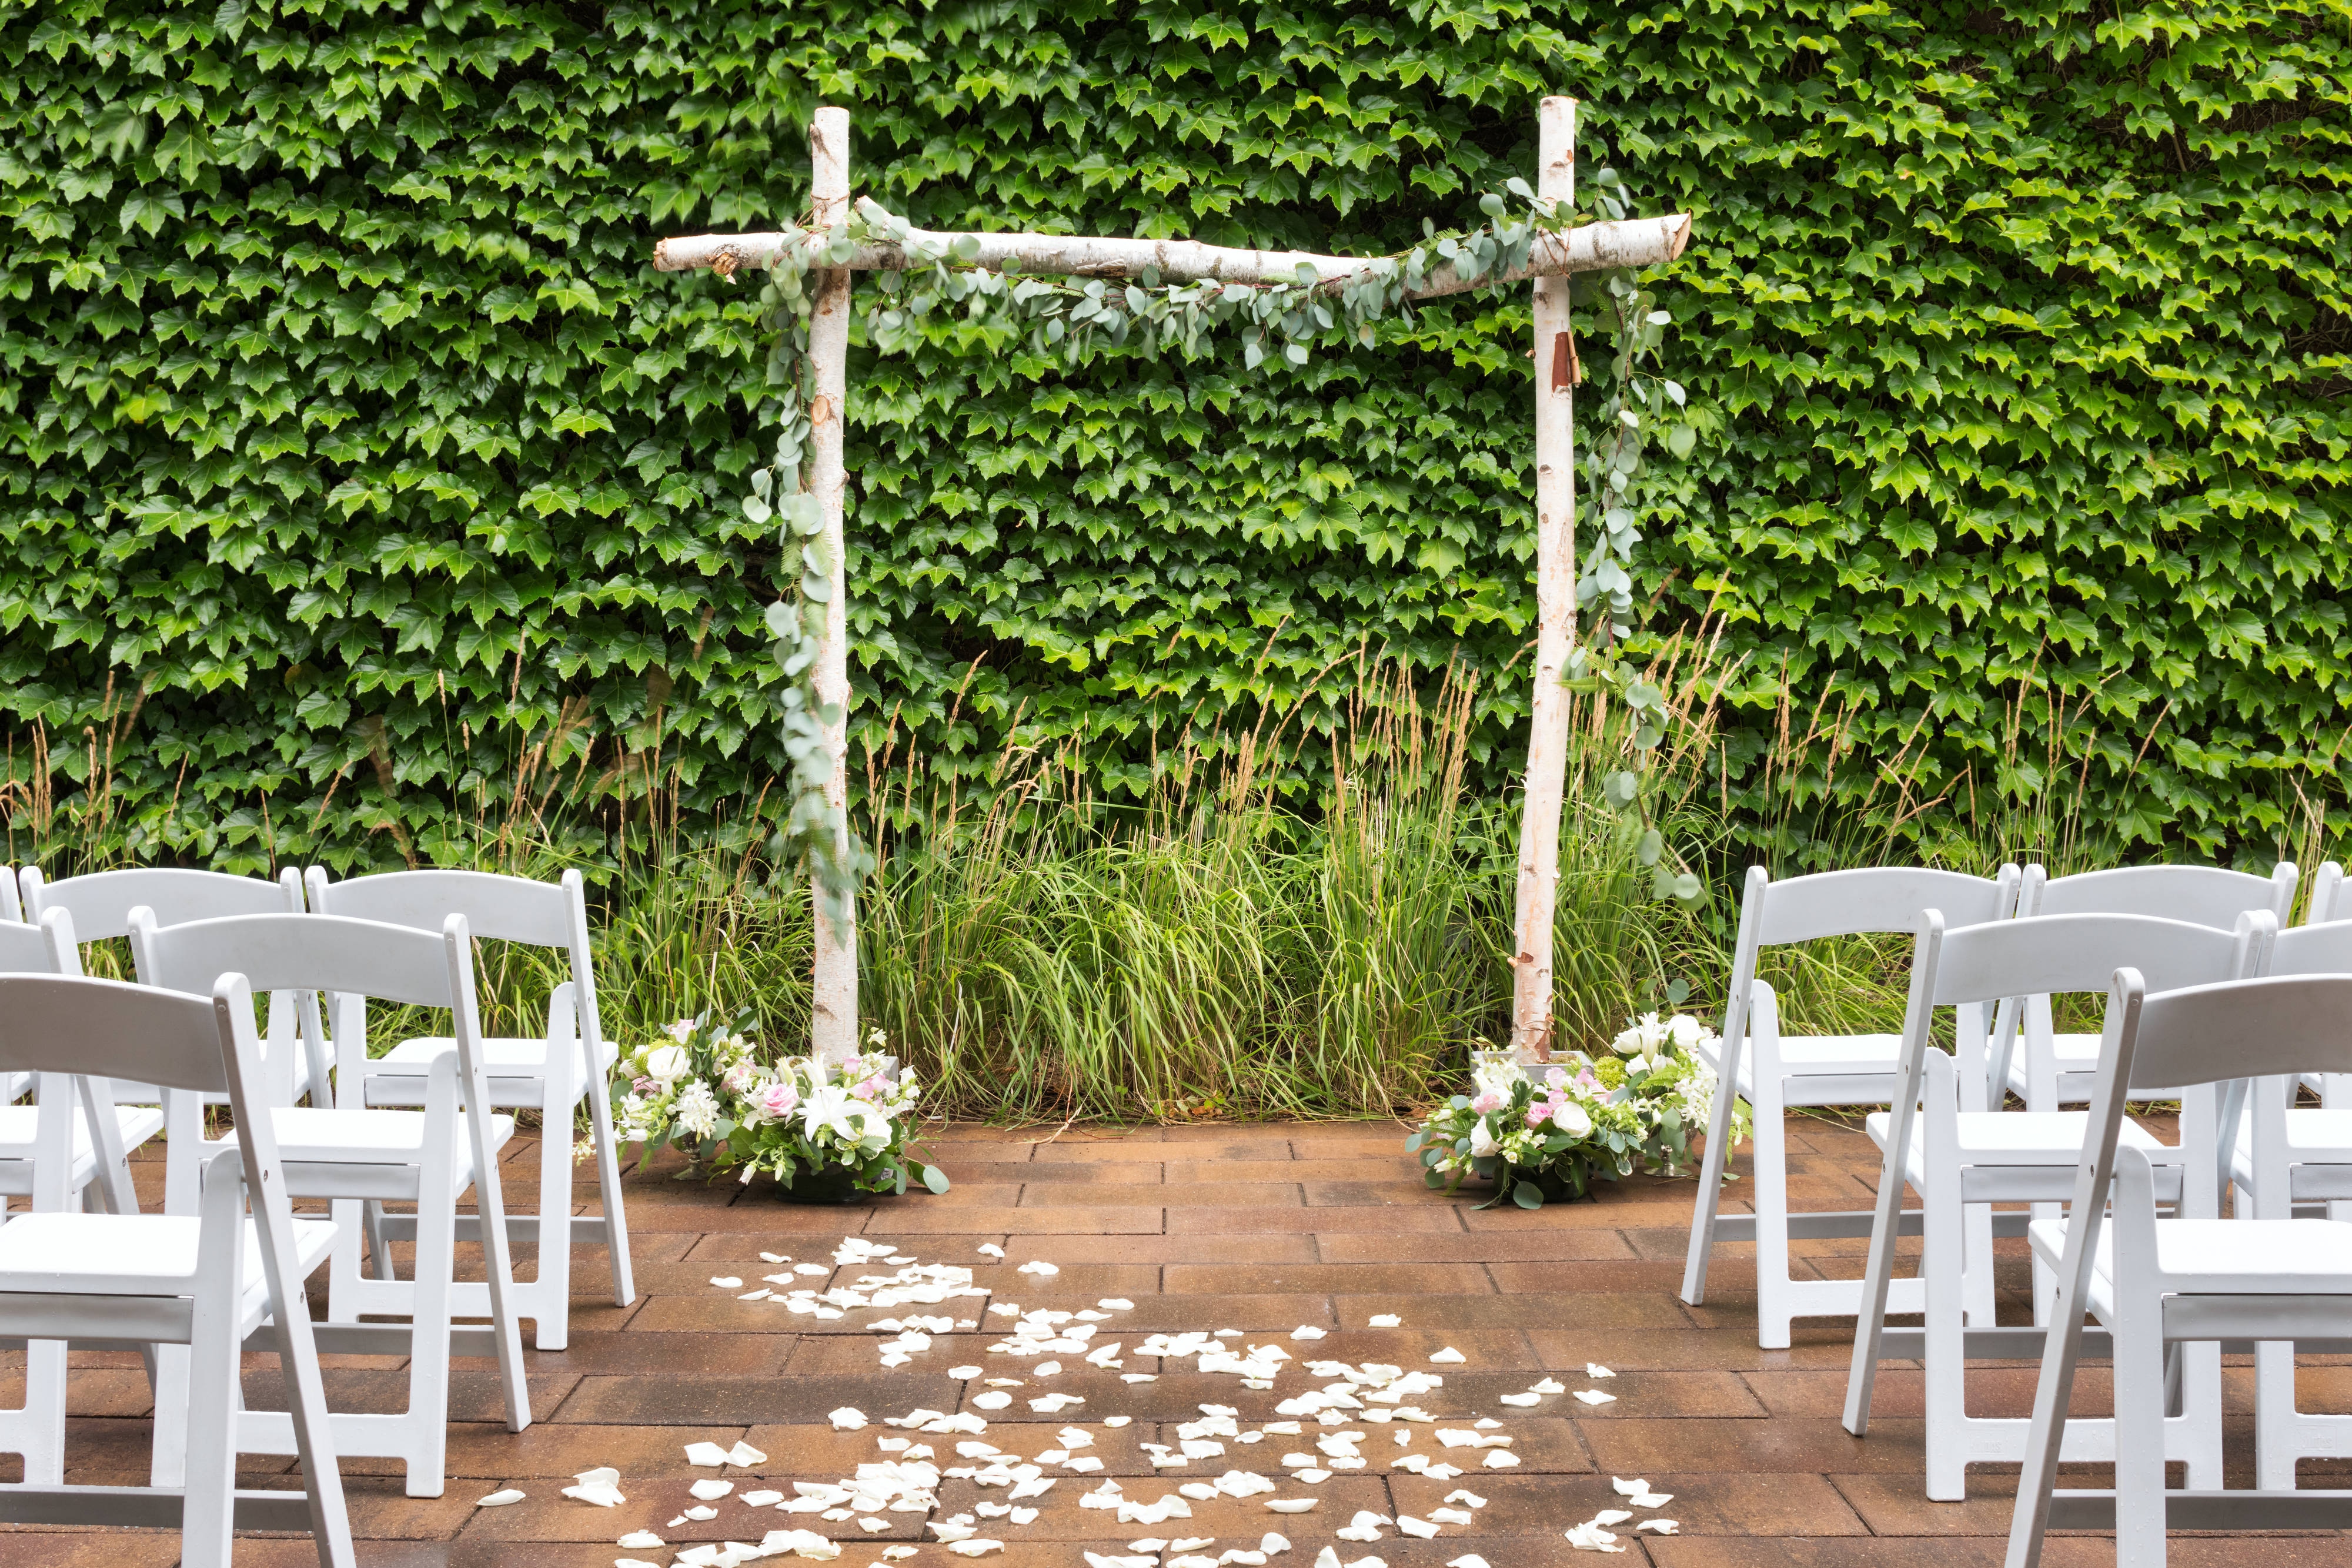 Decorative wedding arch against a wall of ivy